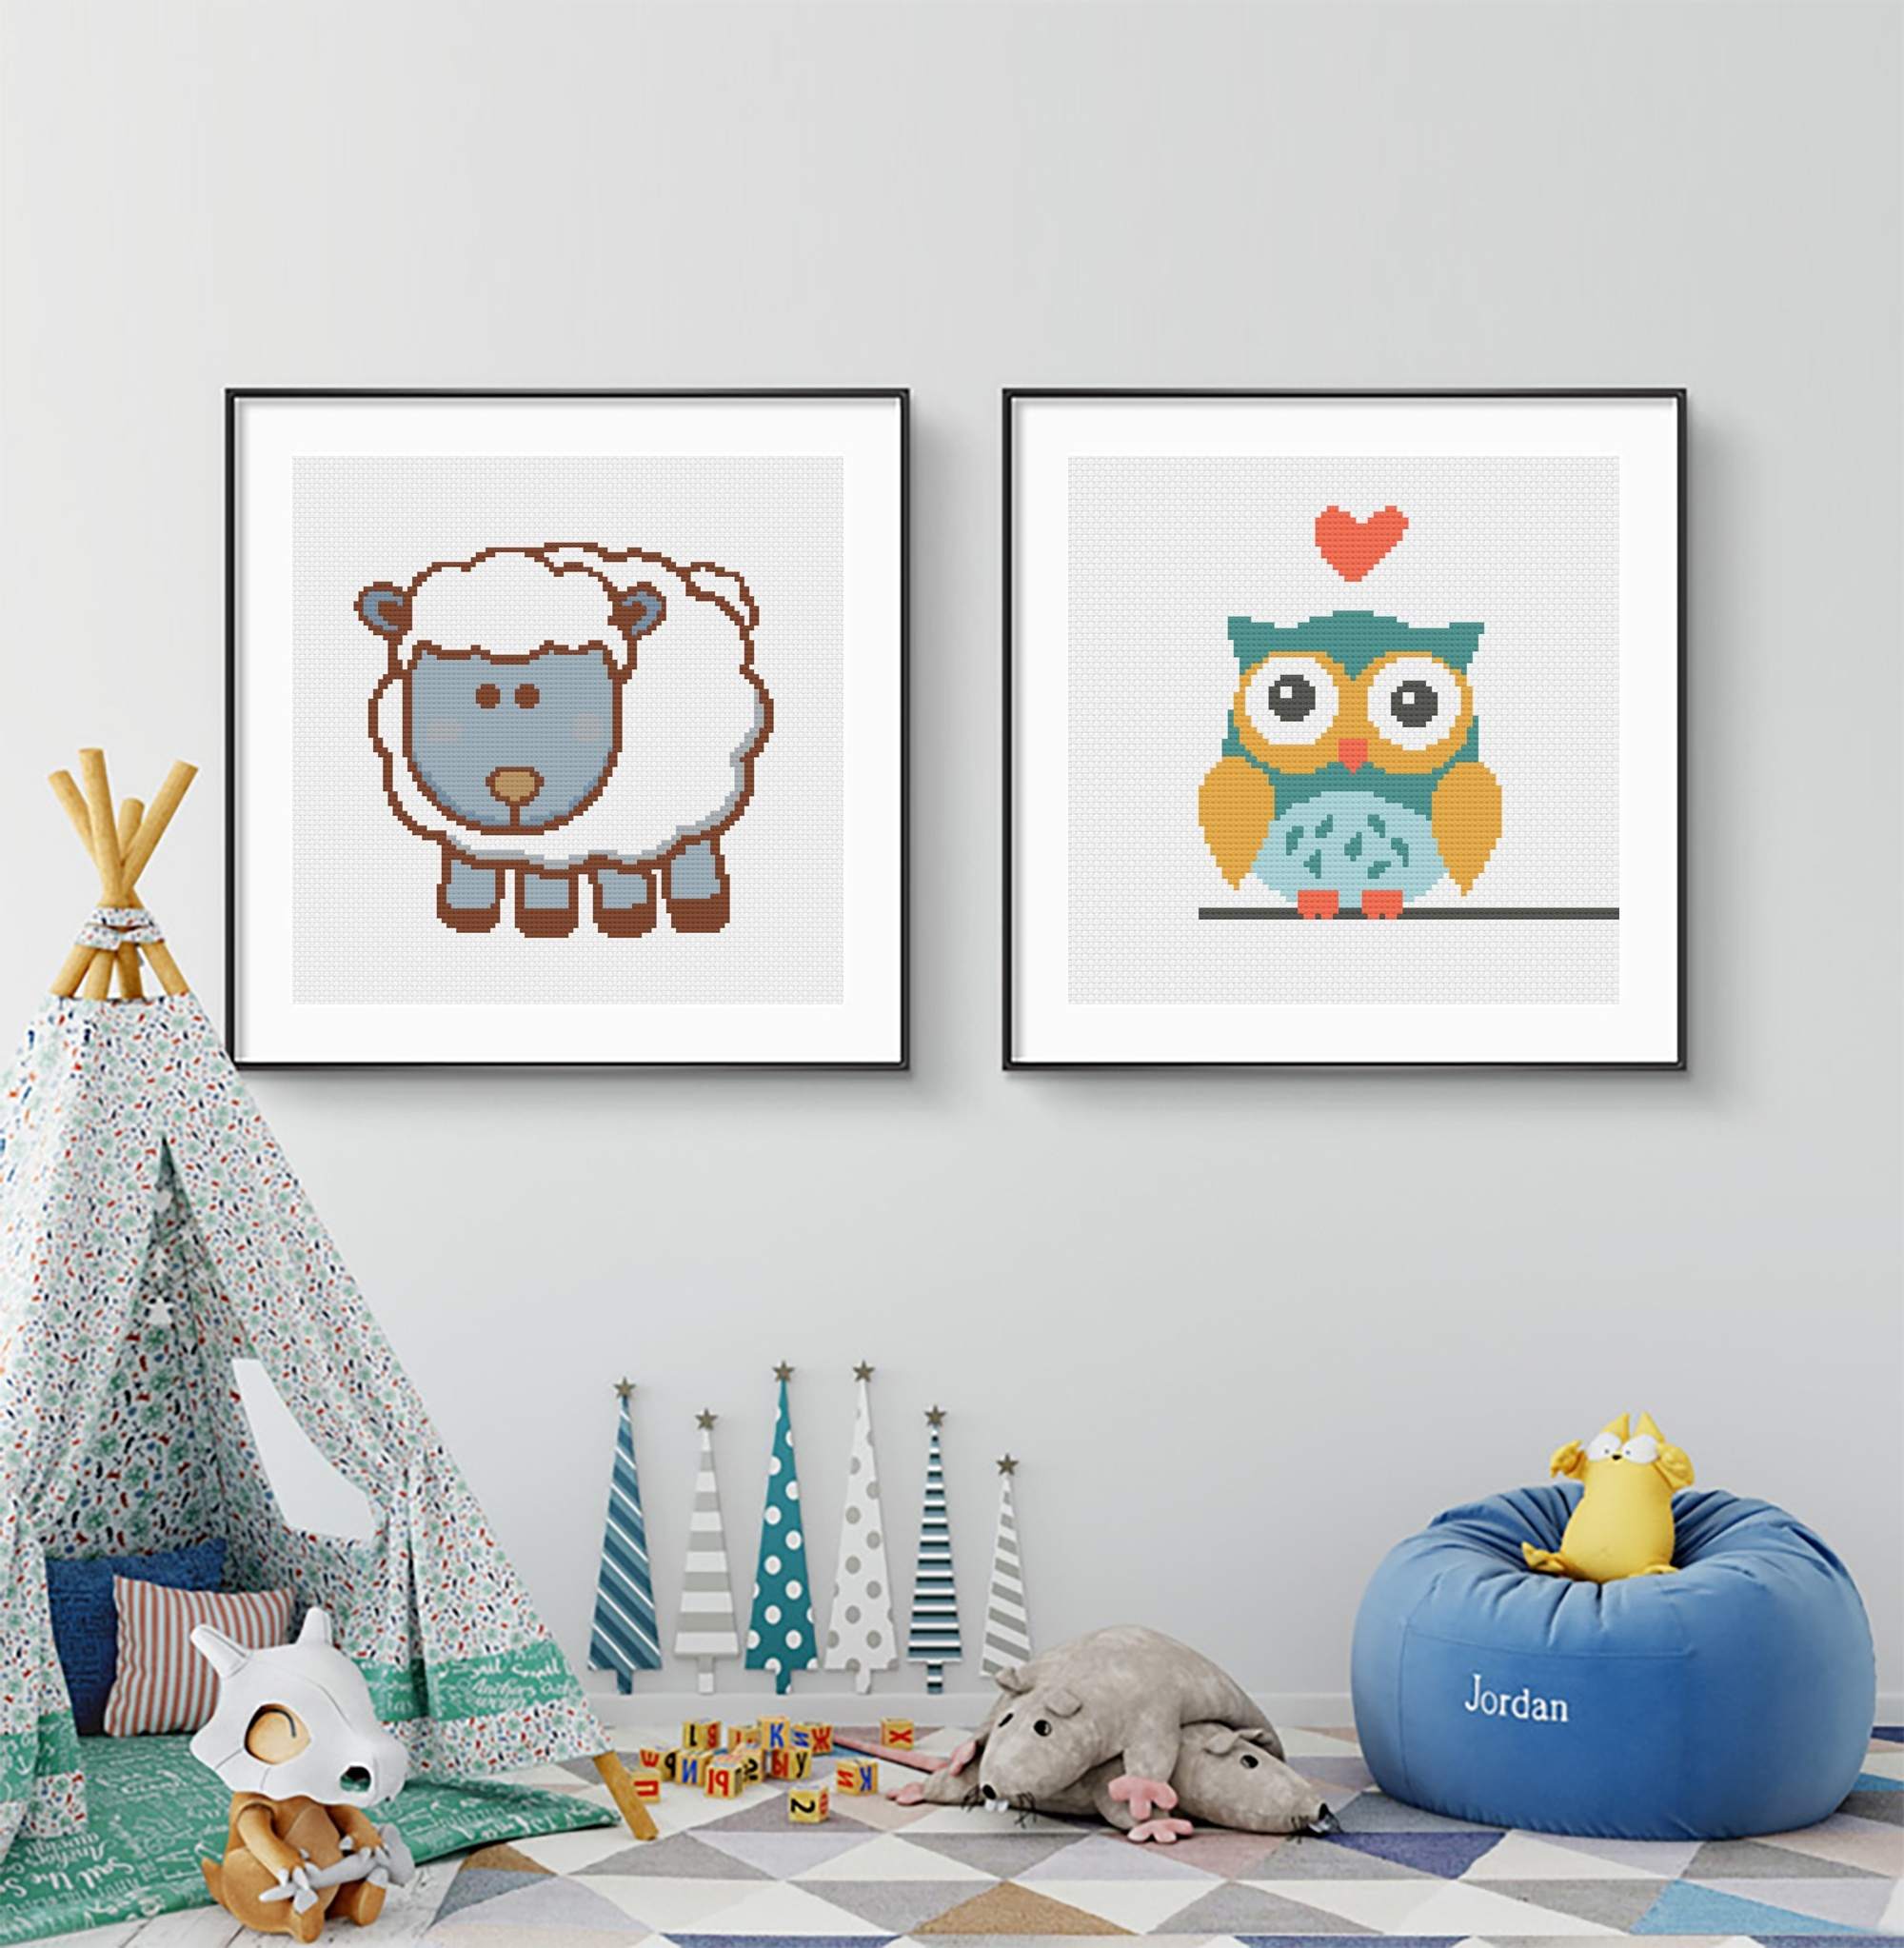 Free Cross Stitch Animal Pattern: Baby Owl - Cheering Studio pertaining to Baby Cross Stitch Patterns Free Printable